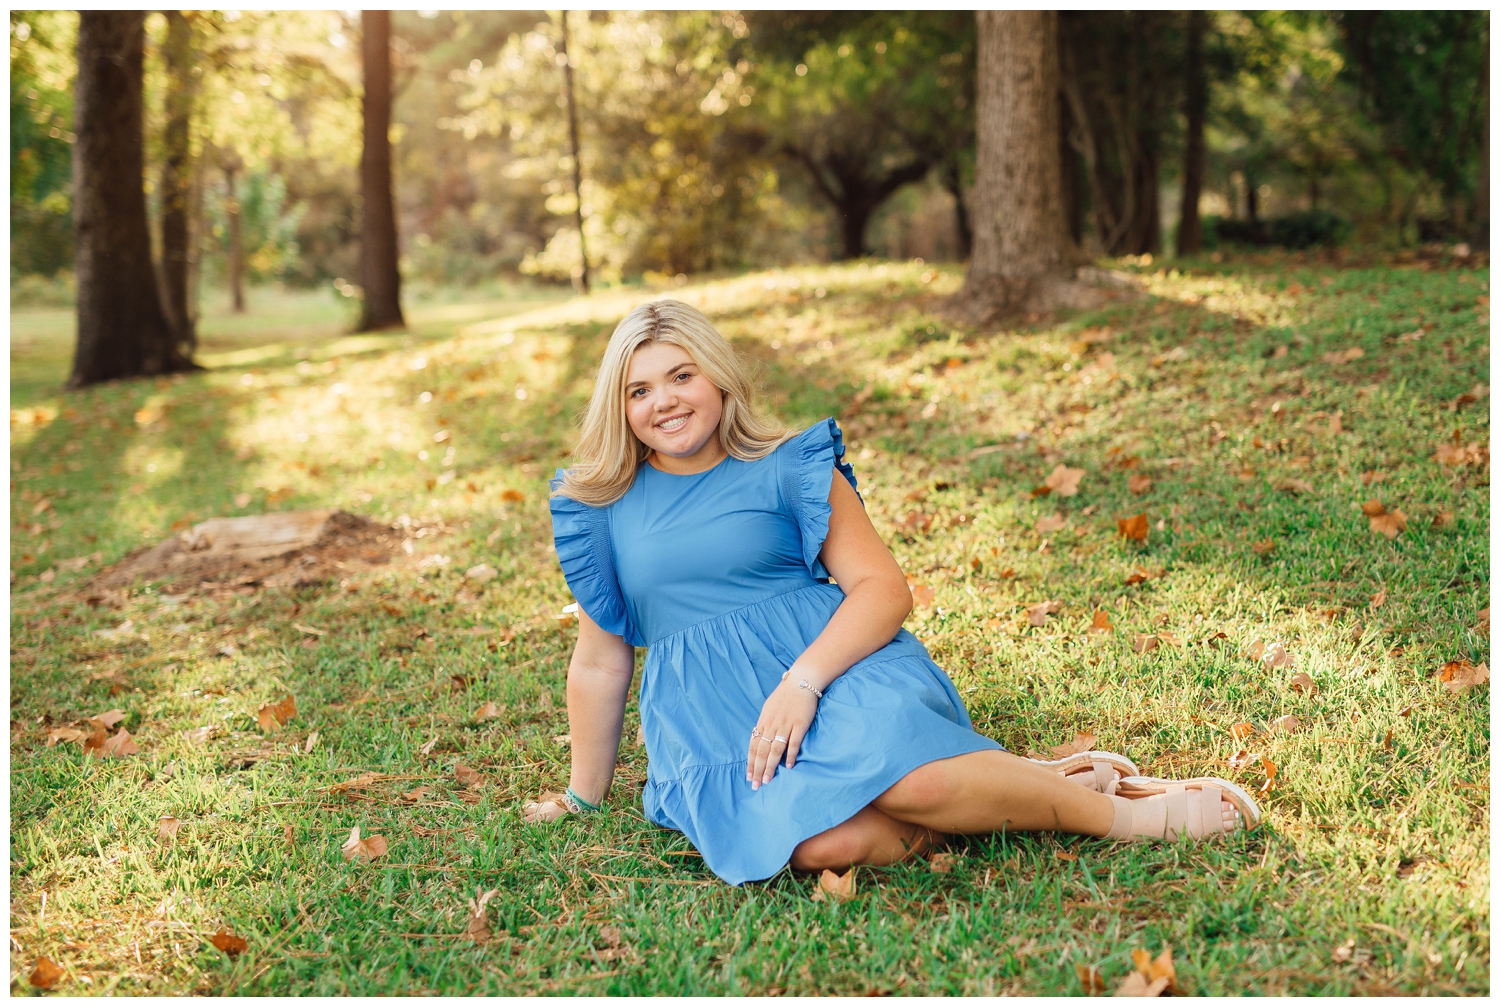 Houston senior in bright blue dress sitting on grass smiling